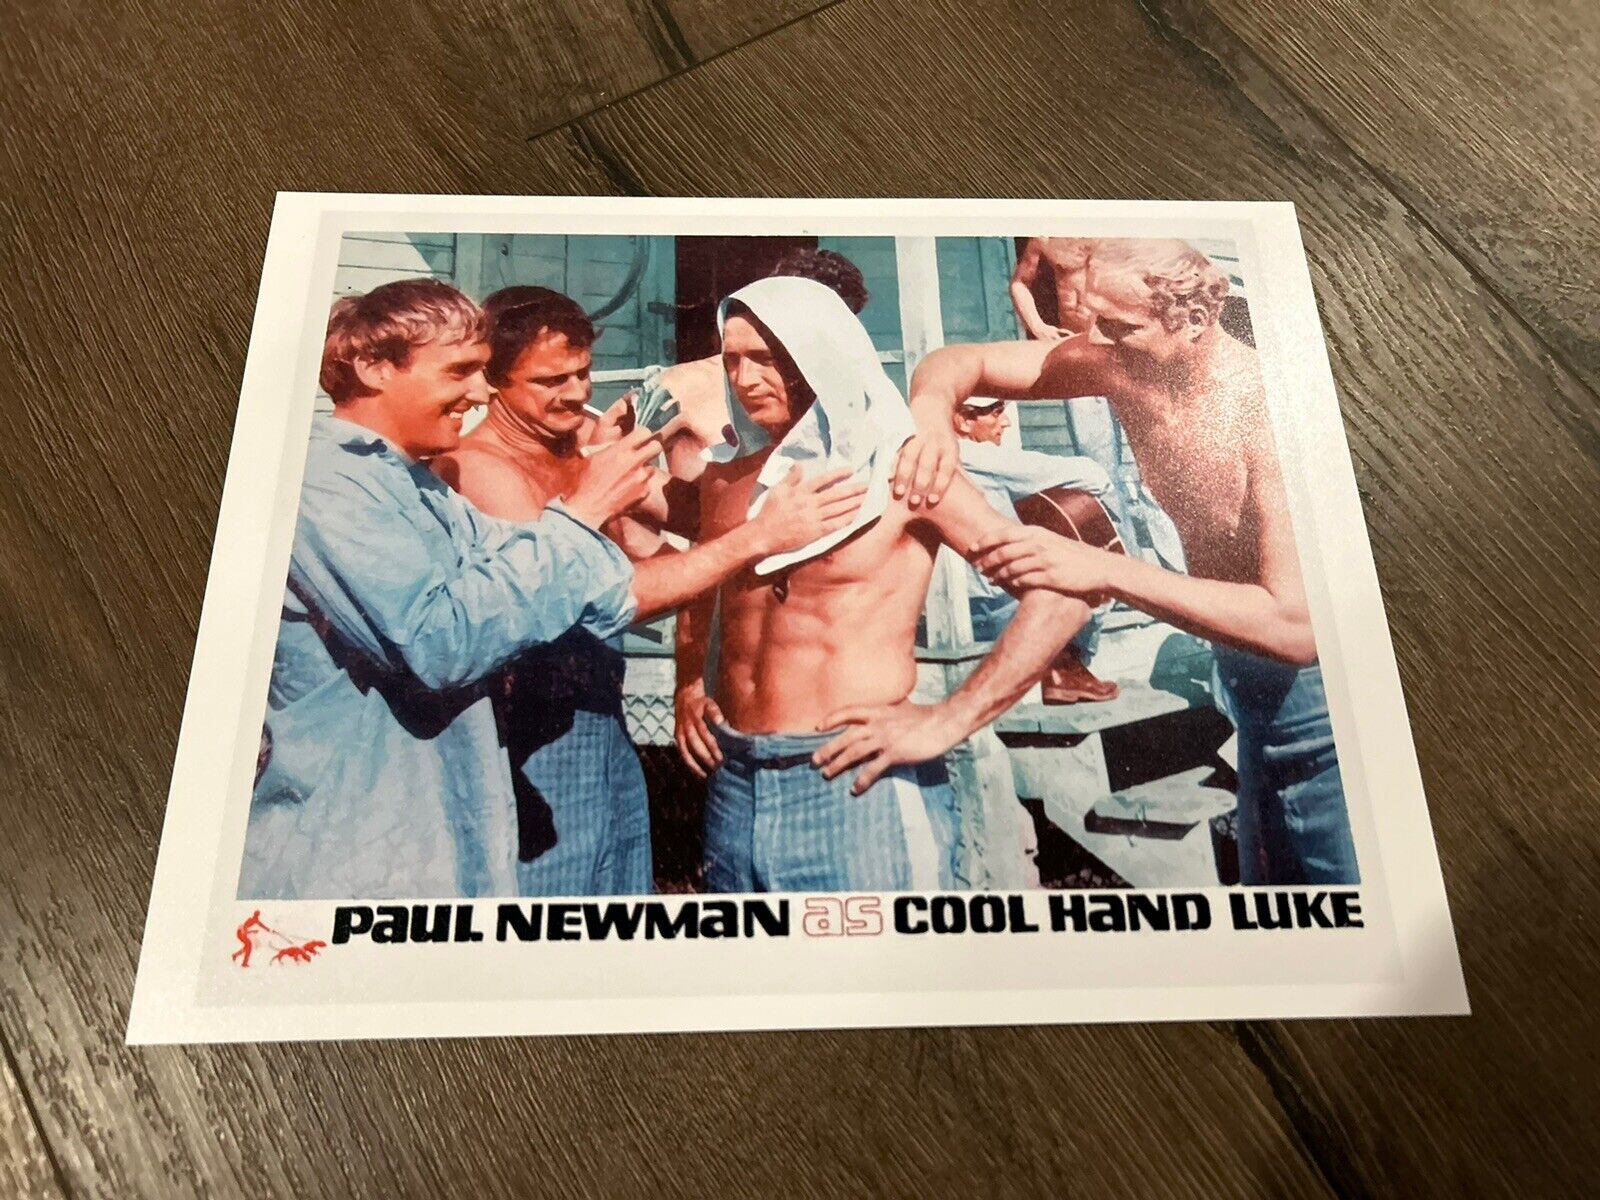 PAUL NEWMAN Cool Hand Luke Art Print Photo 8x10 Poster Prison  Shirtless Male